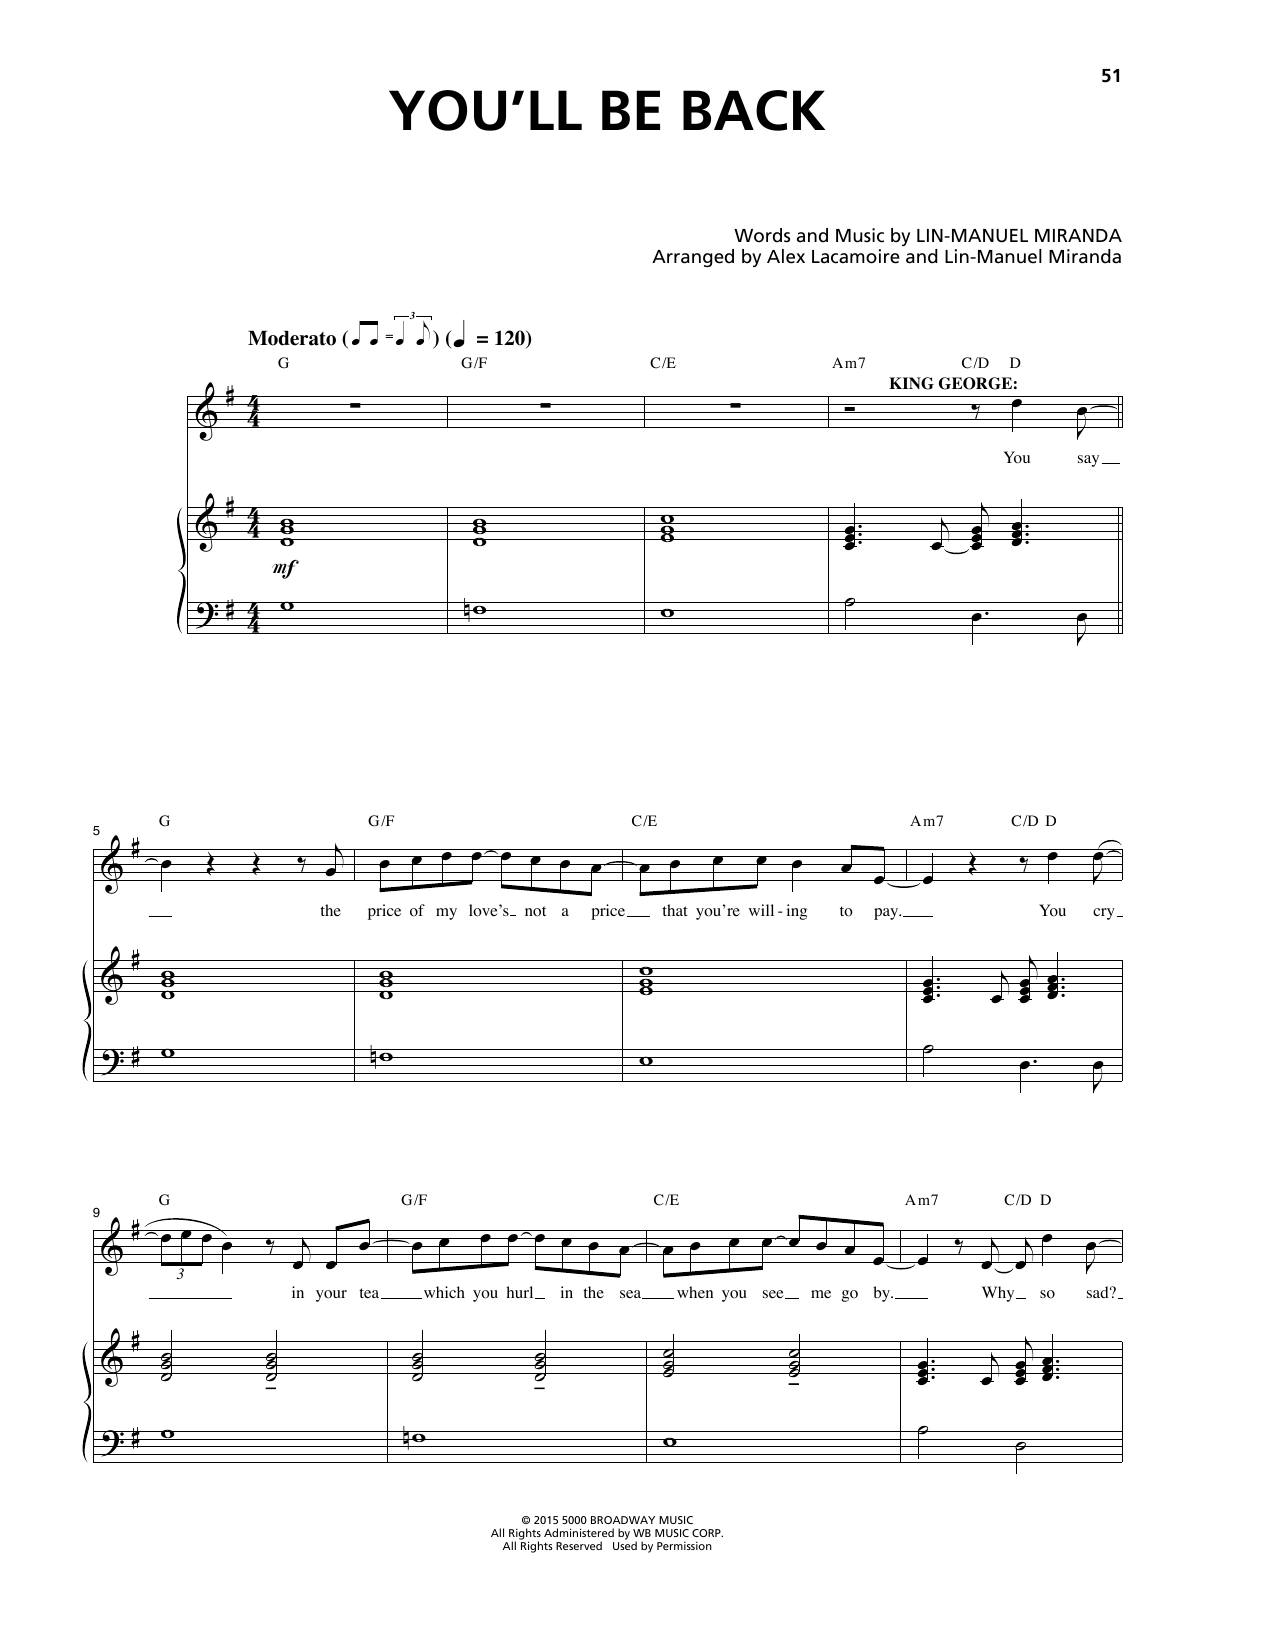 Lin-Manuel Miranda You'll Be Back (from Hamilton) Sheet Music Notes & Chords for Melody Line, Lyrics & Chords - Download or Print PDF